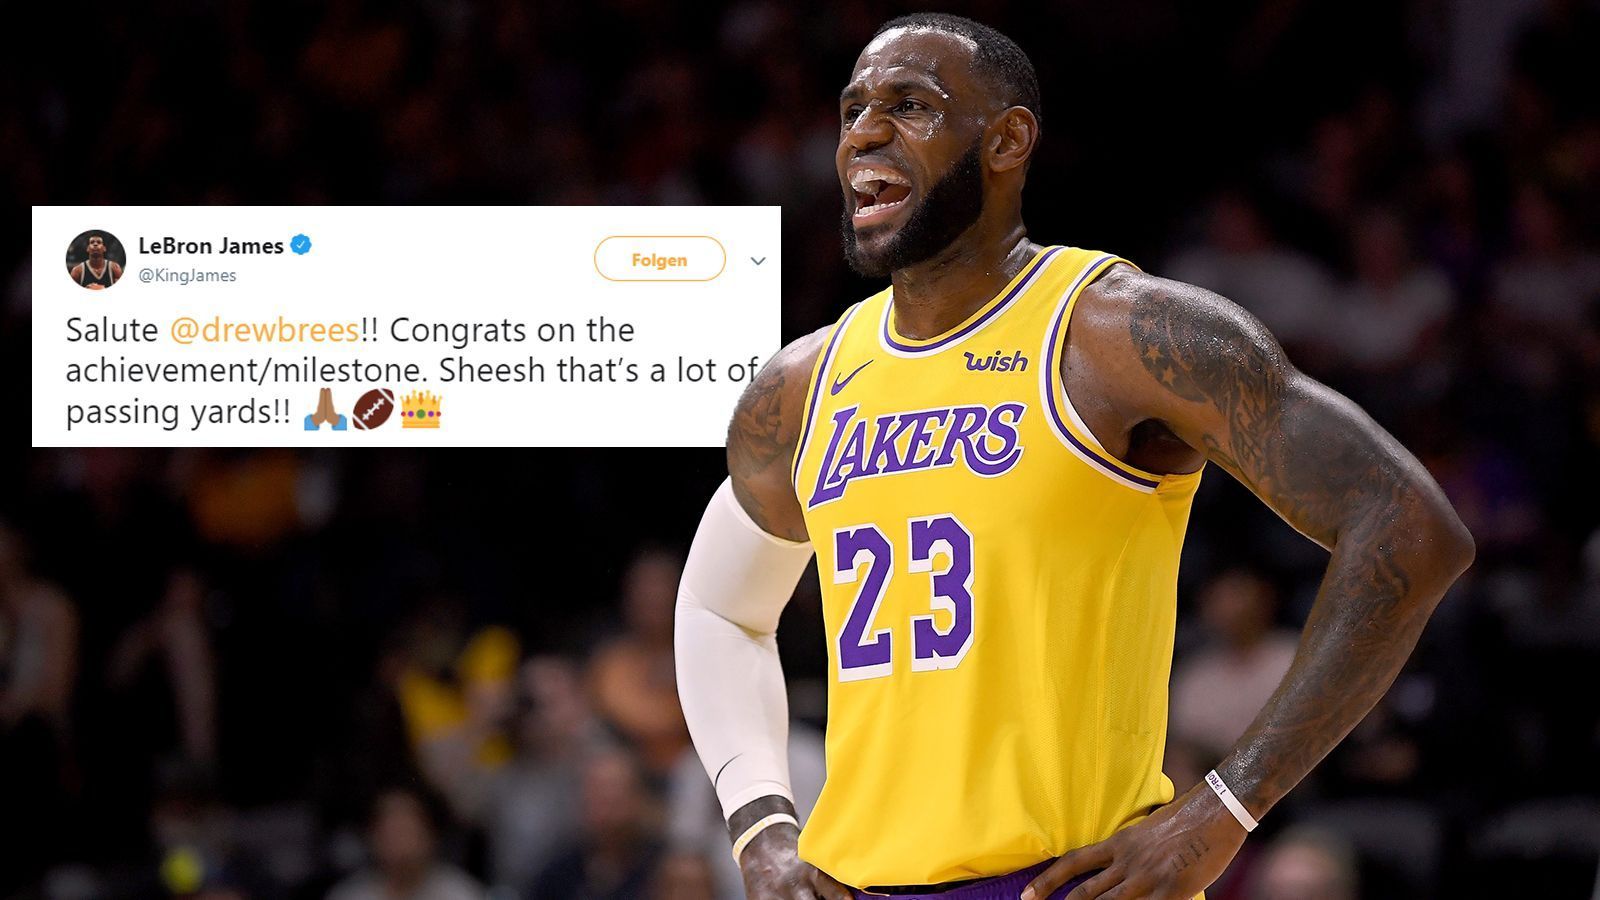 
                <strong>LeBron James </strong><br>
                Der Basketball-Star der Los Angeles Lakers gratulierte ebenfalls. "Sheesh, das sind viele Passing Yards!!"
              